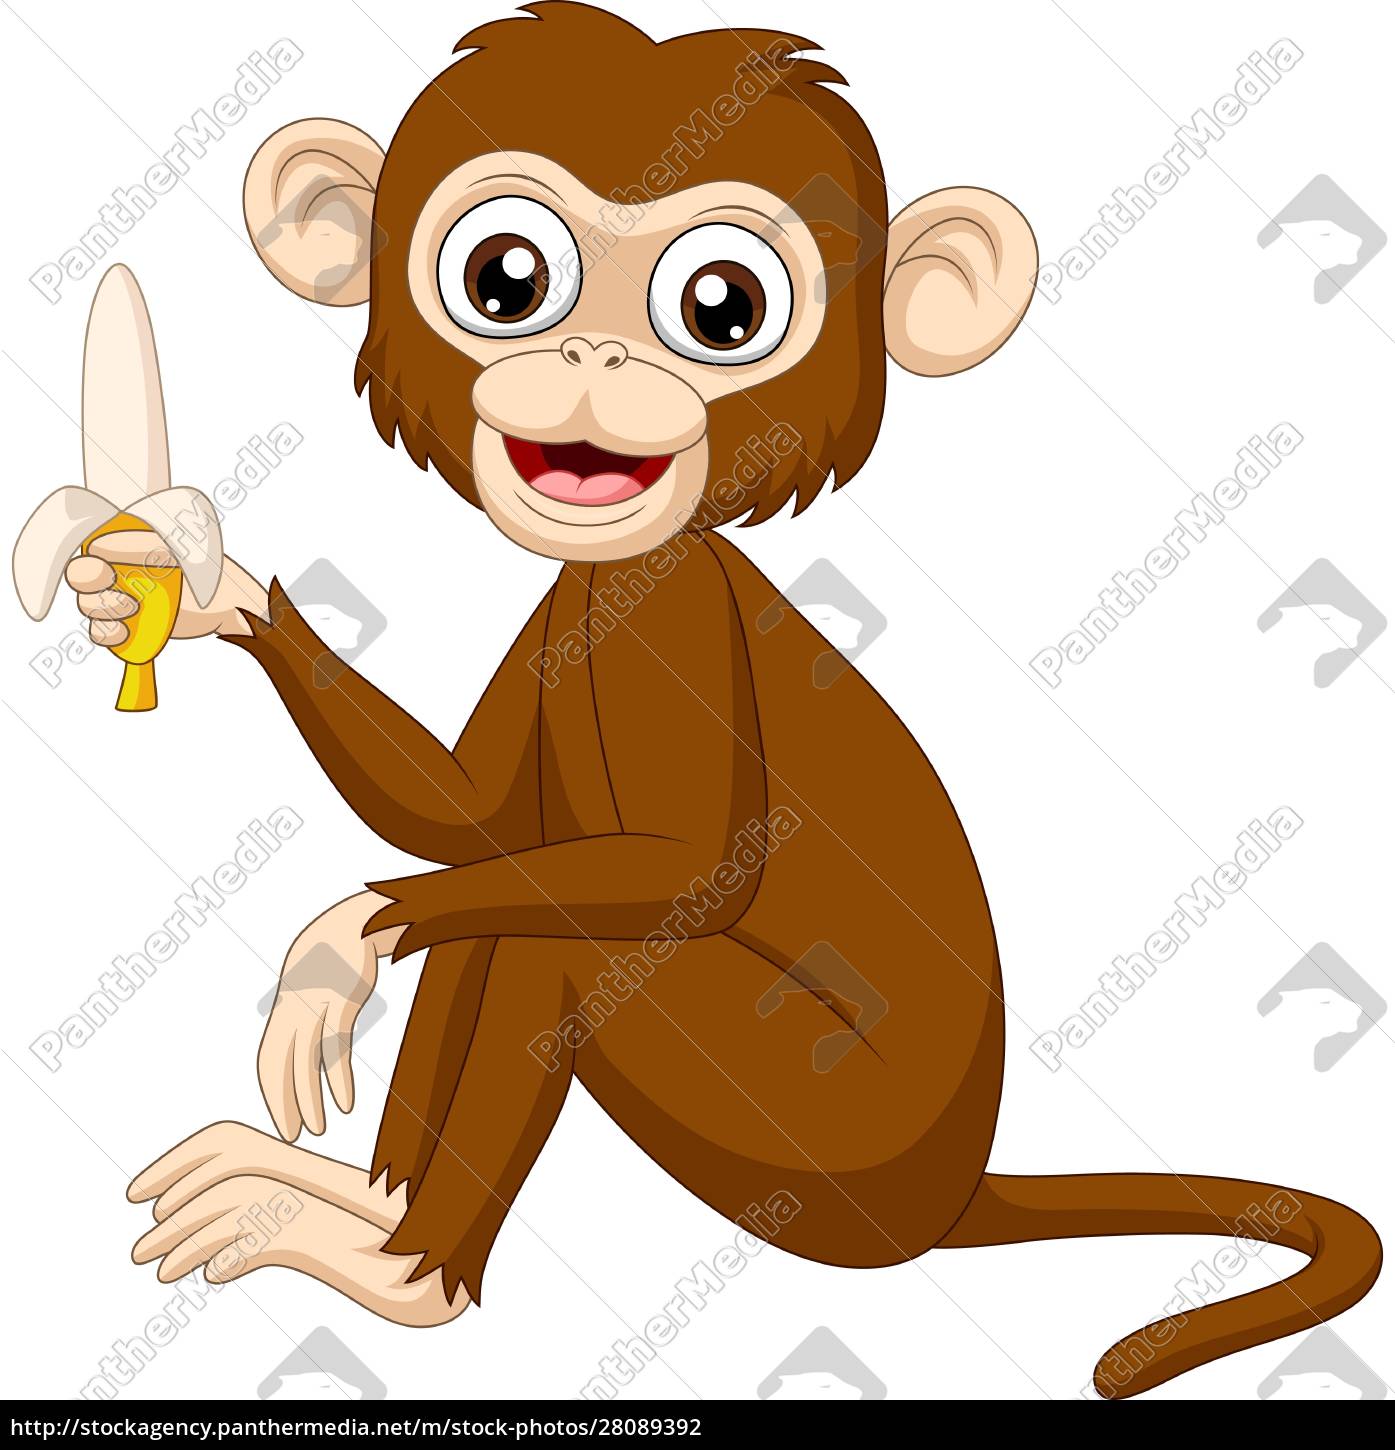 Desenho de macaco bonito segurando banana